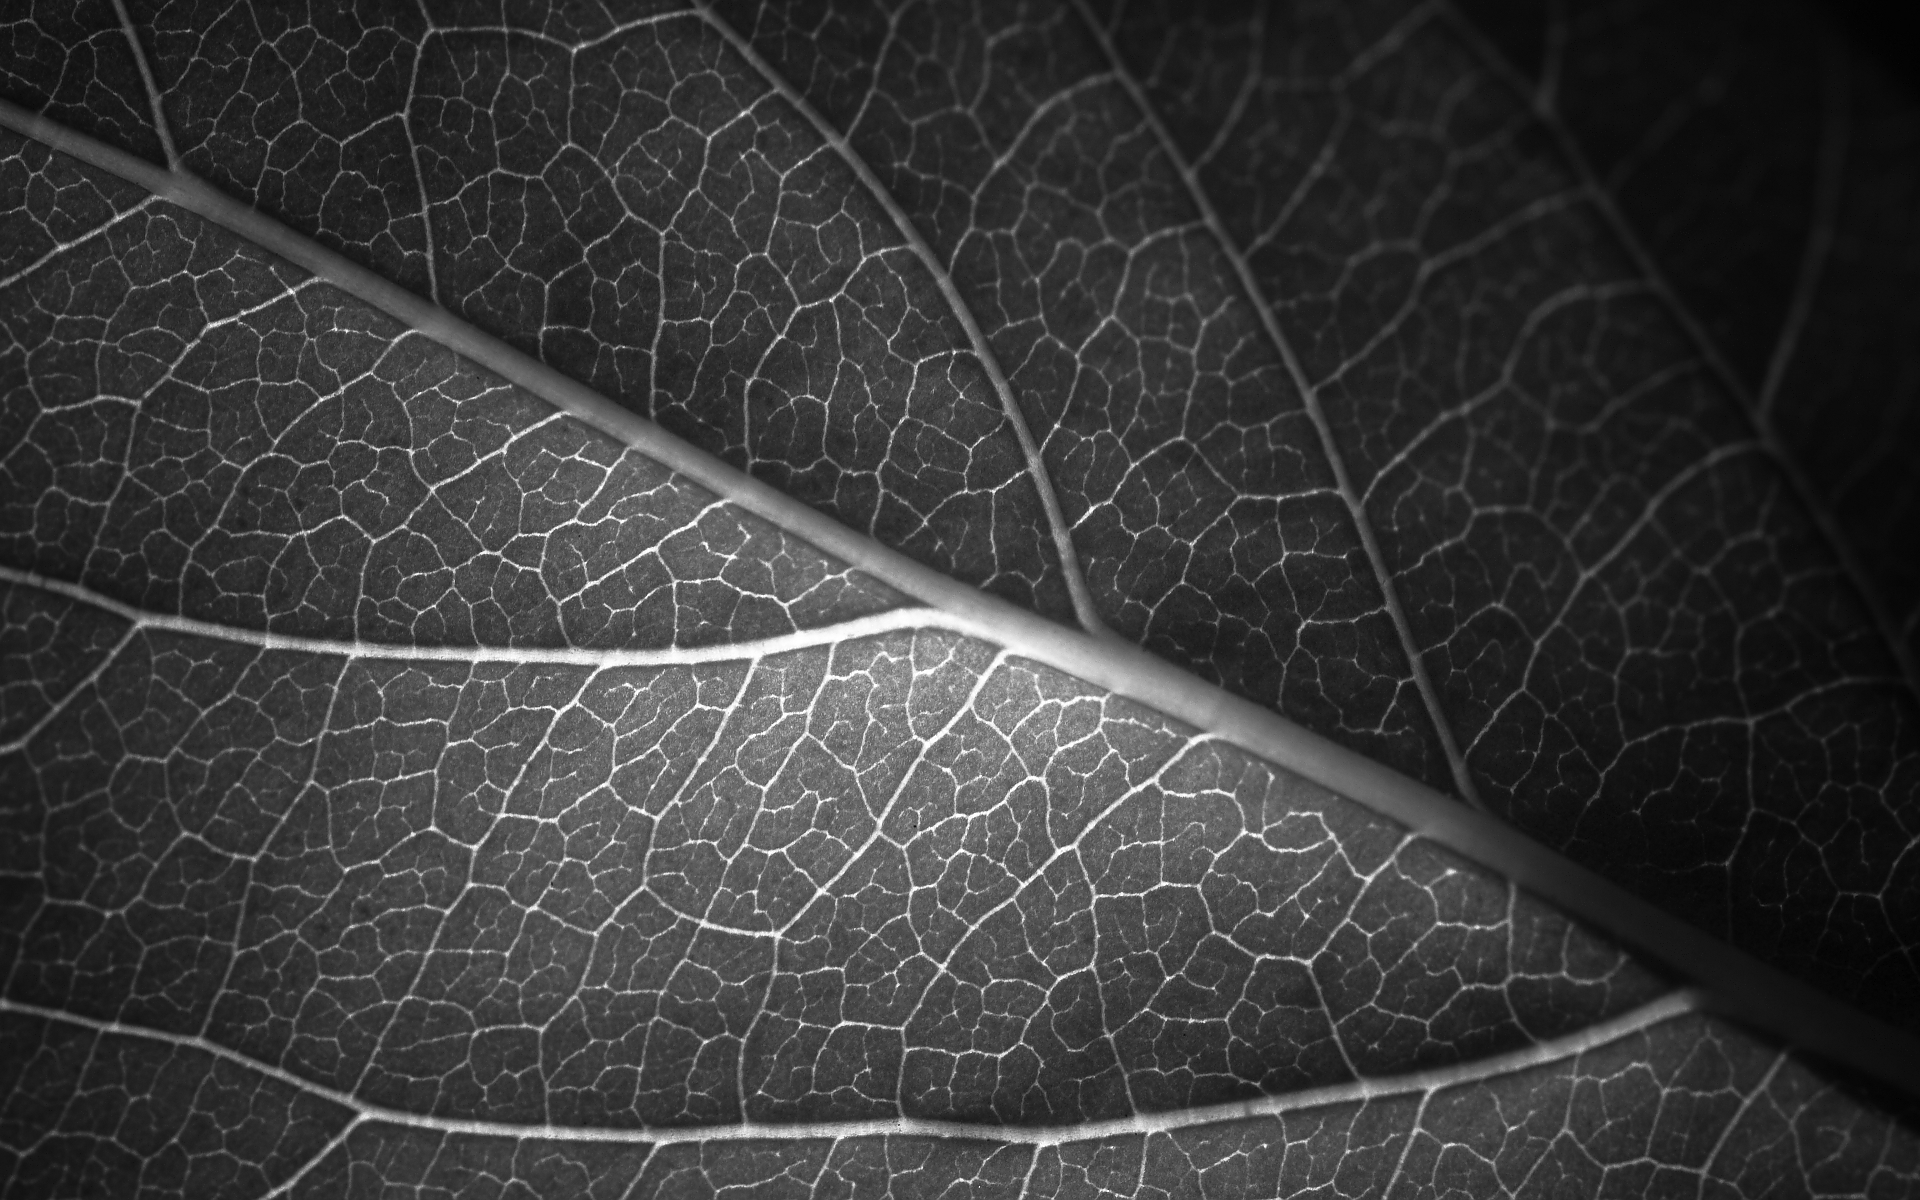 nice leaf grayscale image